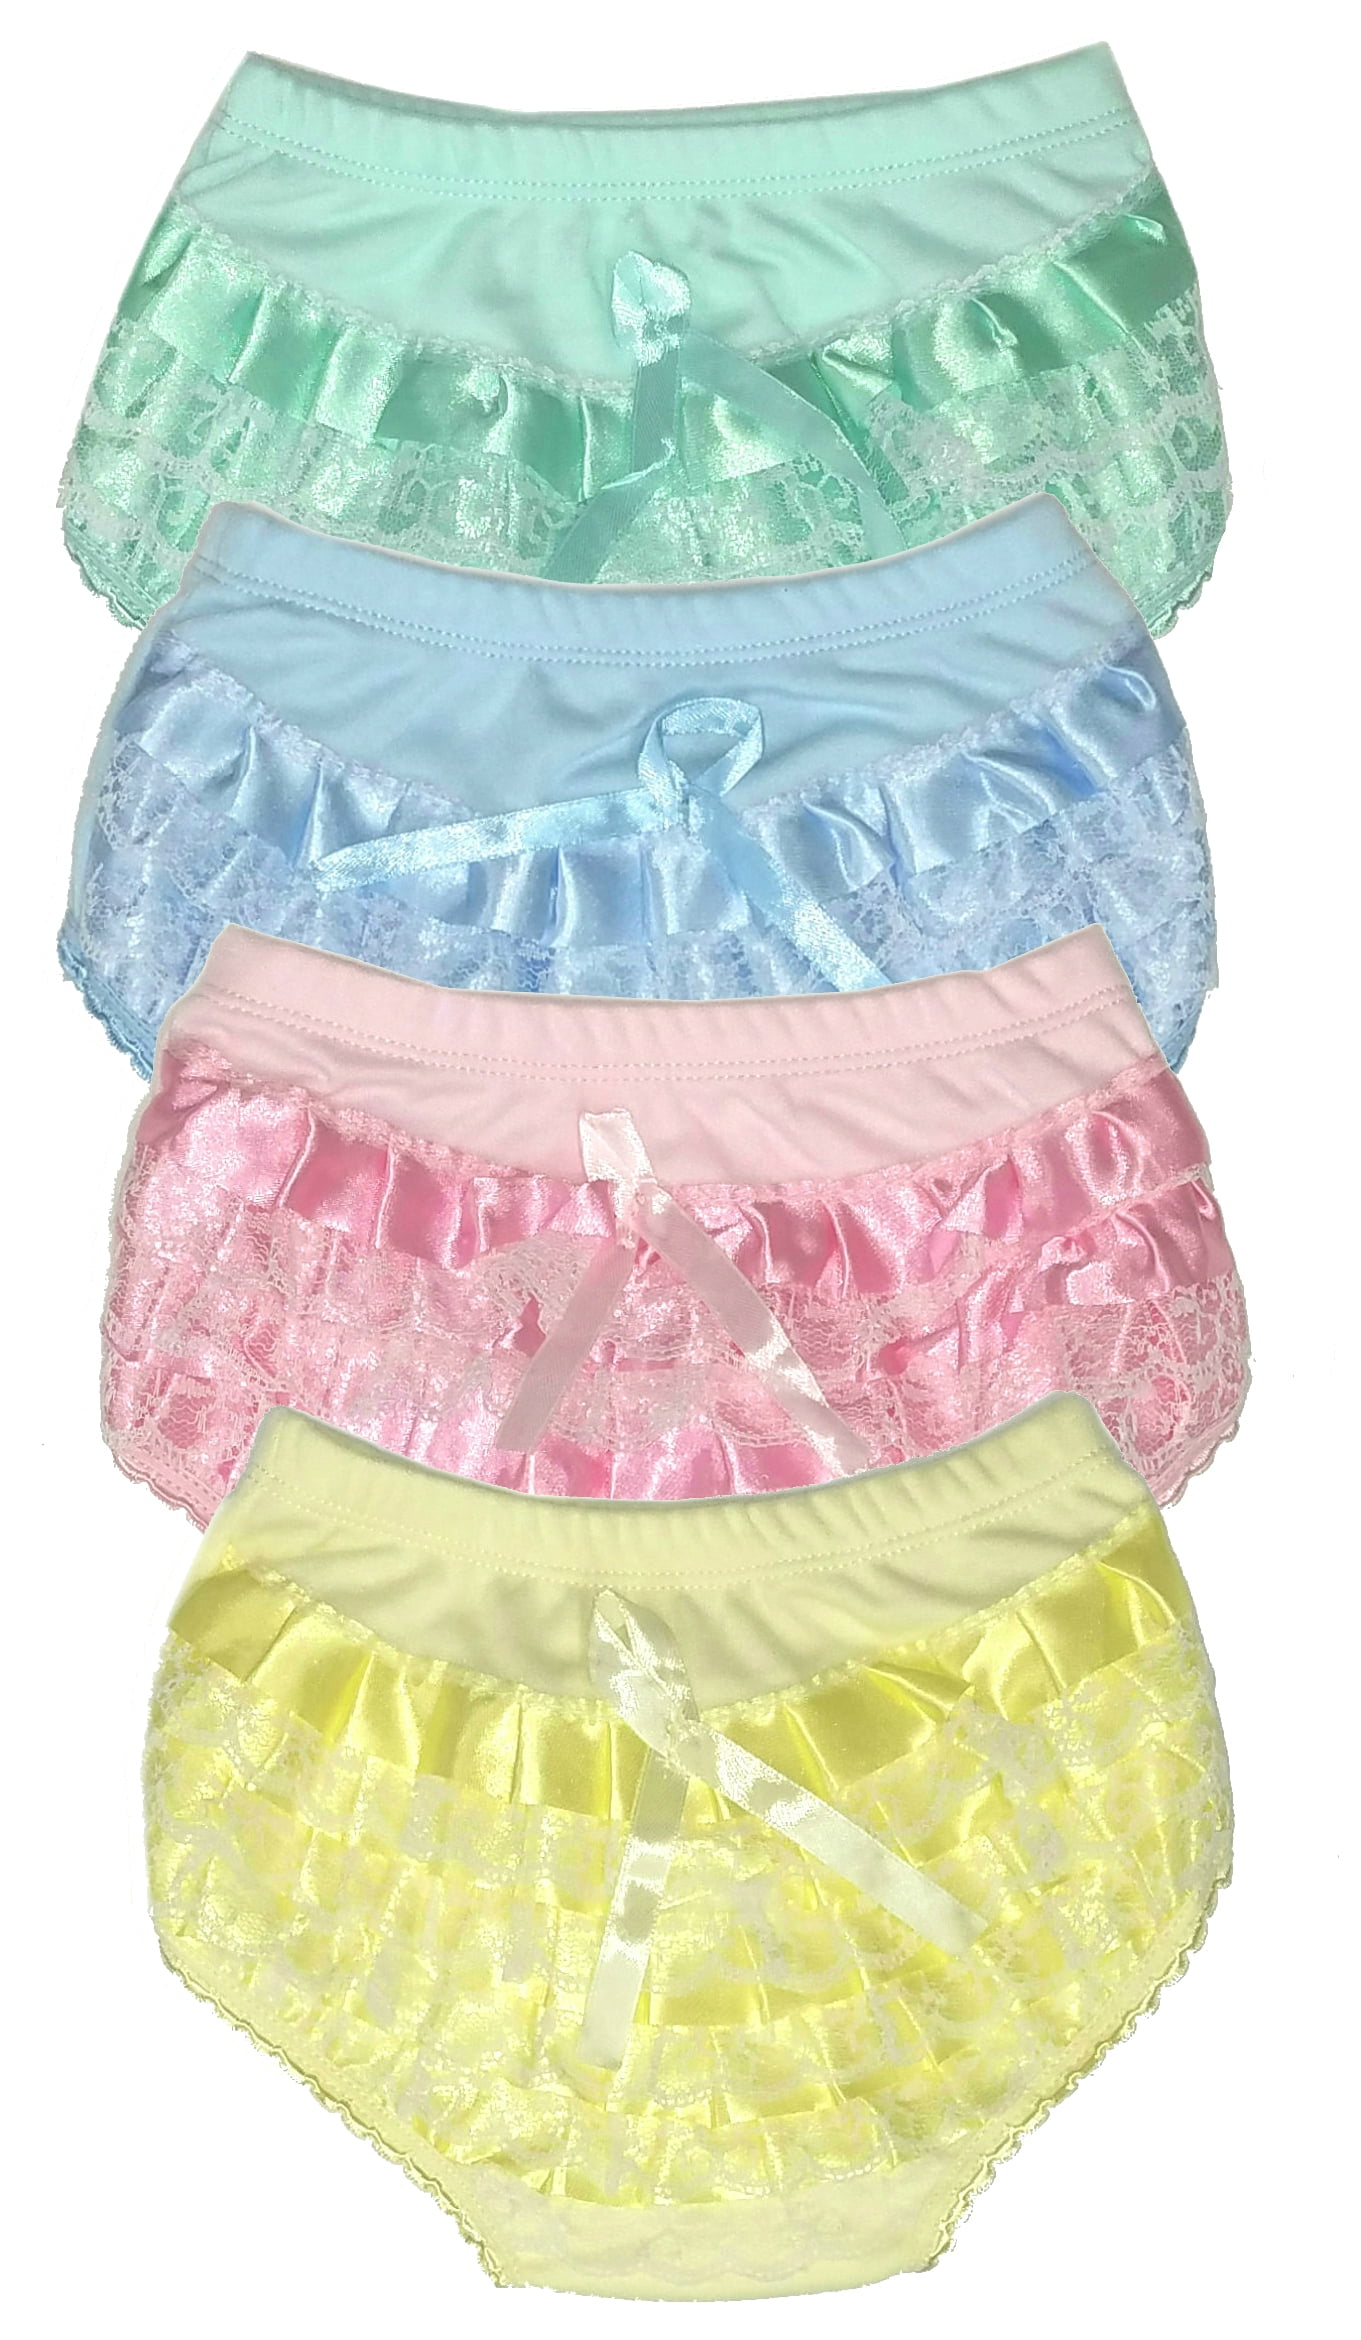 WINZIK Baby Girls Kids Bloomers Diaper Covers Shorts Underwear Panty Pretty Ruffle Briefs Elastic Waistband Cotton Pants 